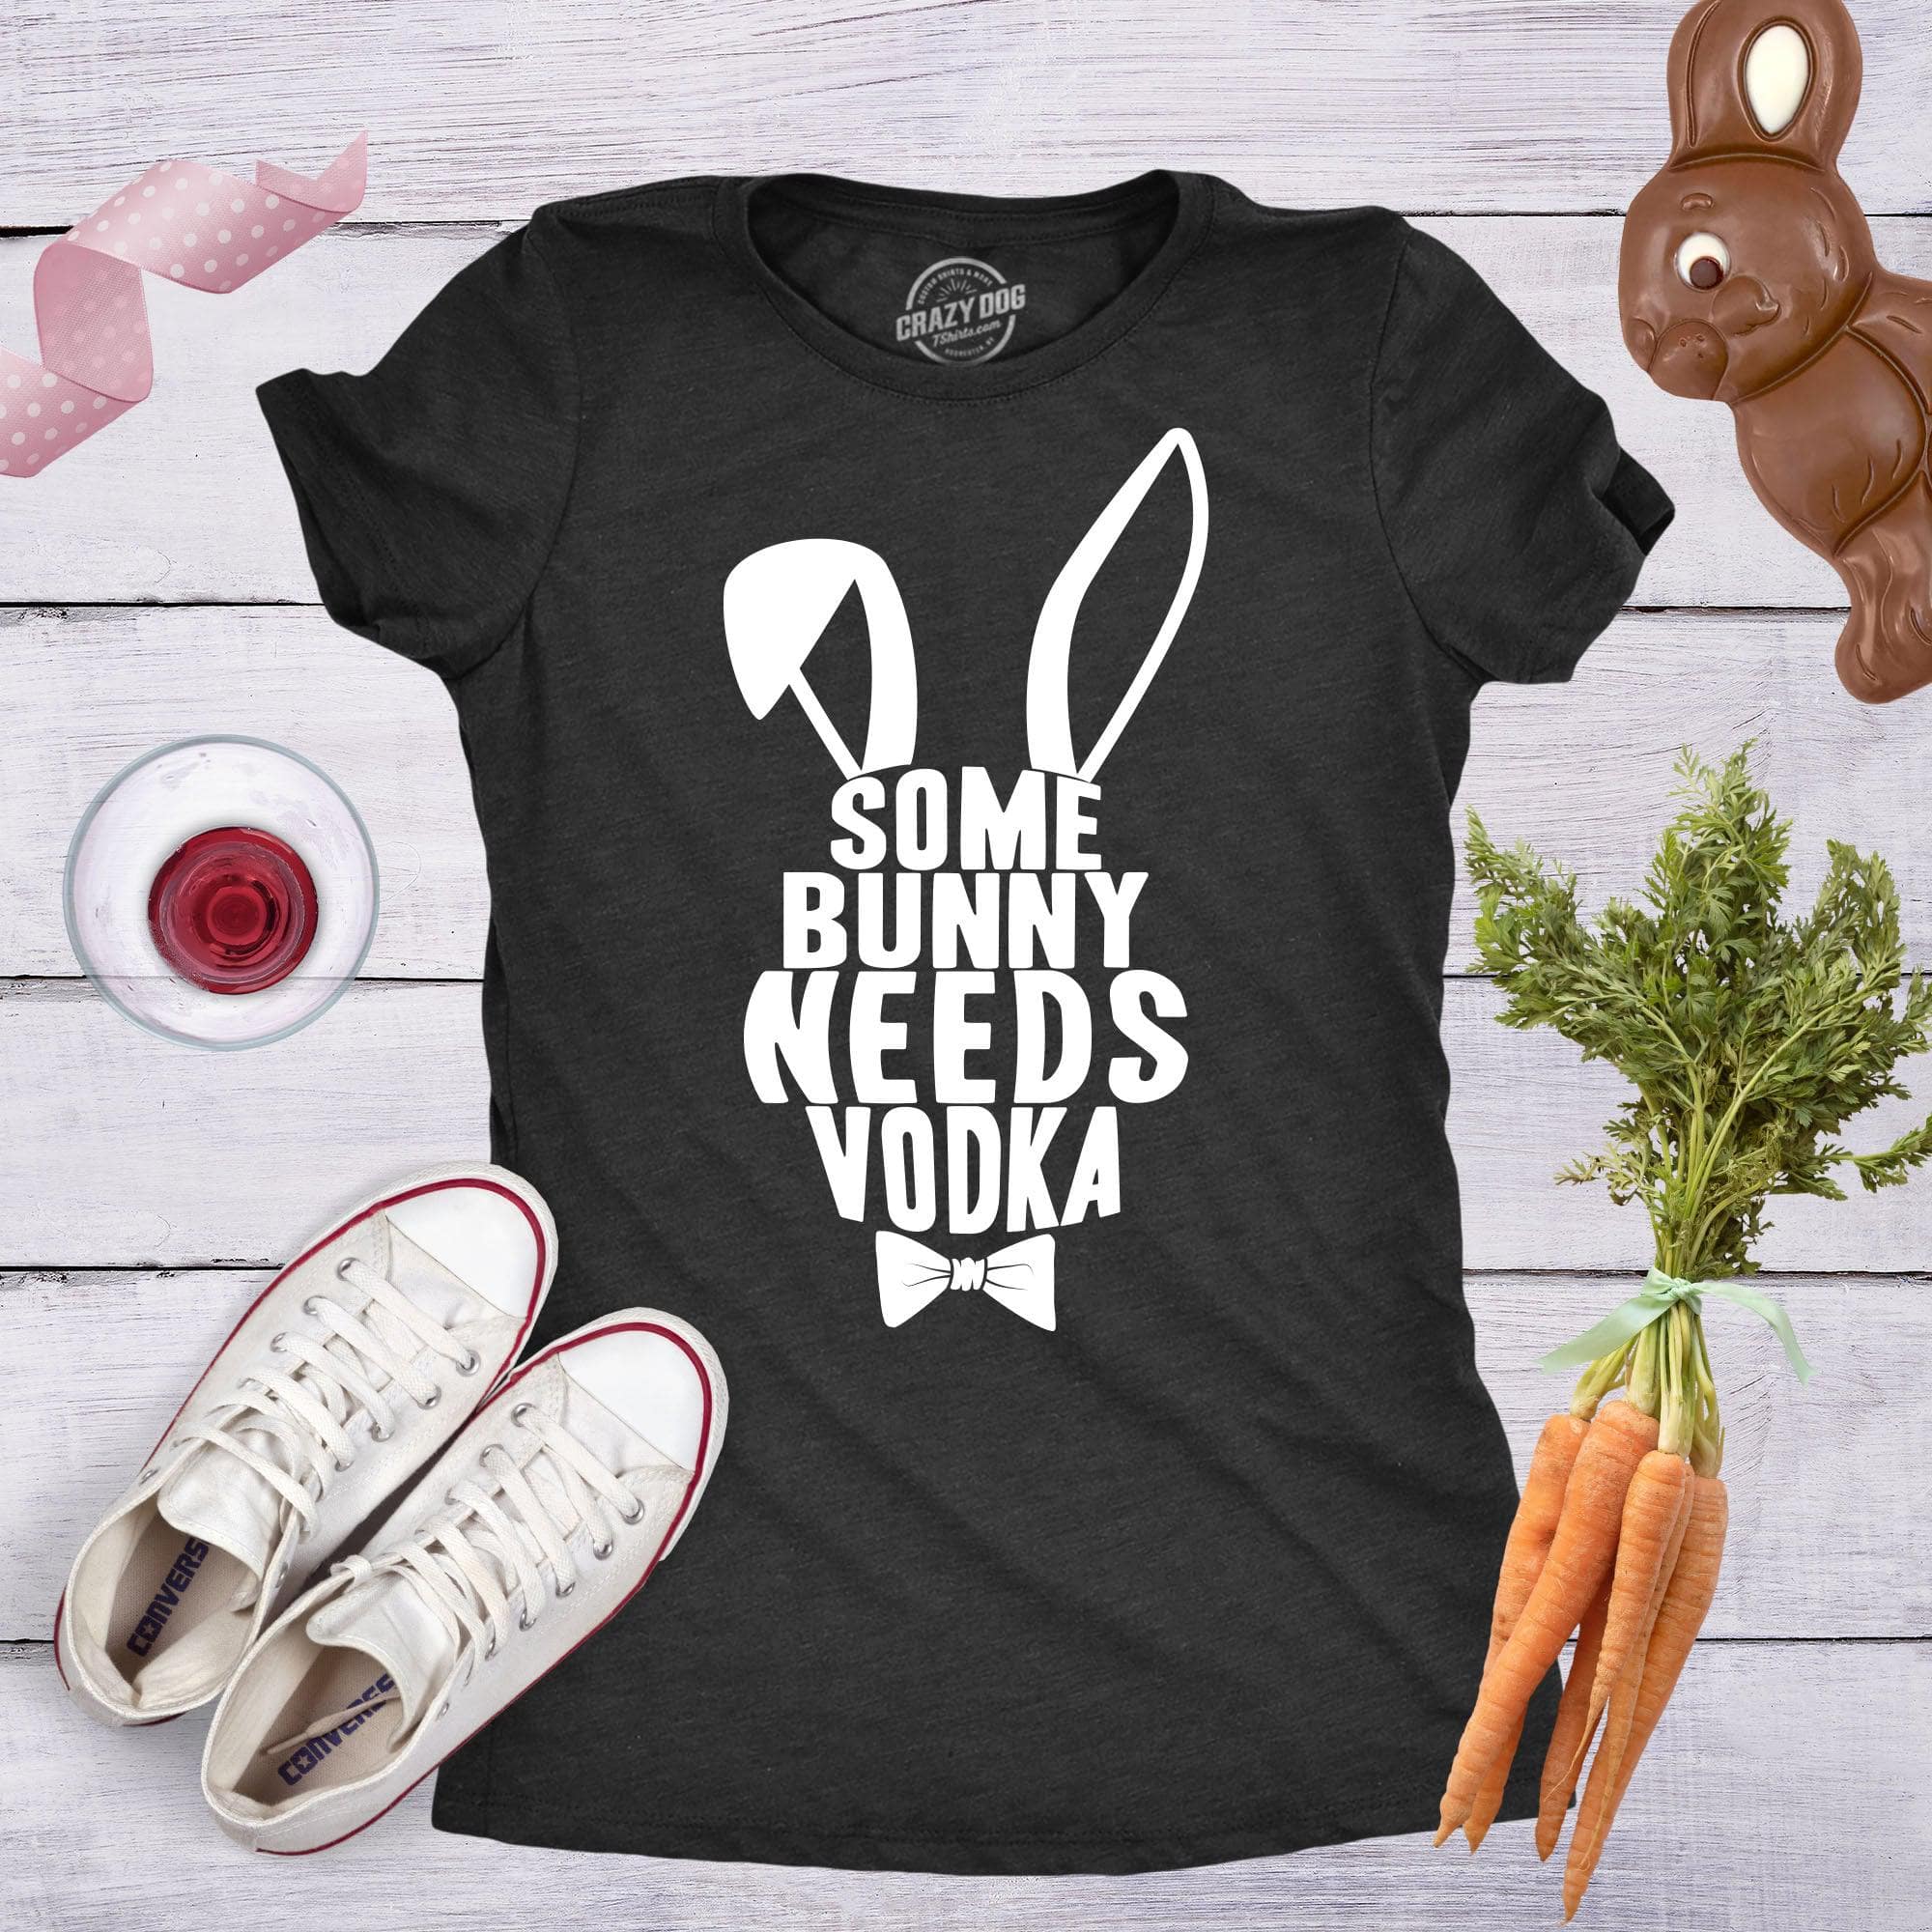 Some Bunny Needs Vodka Women's Tshirt  -  Crazy Dog T-Shirts